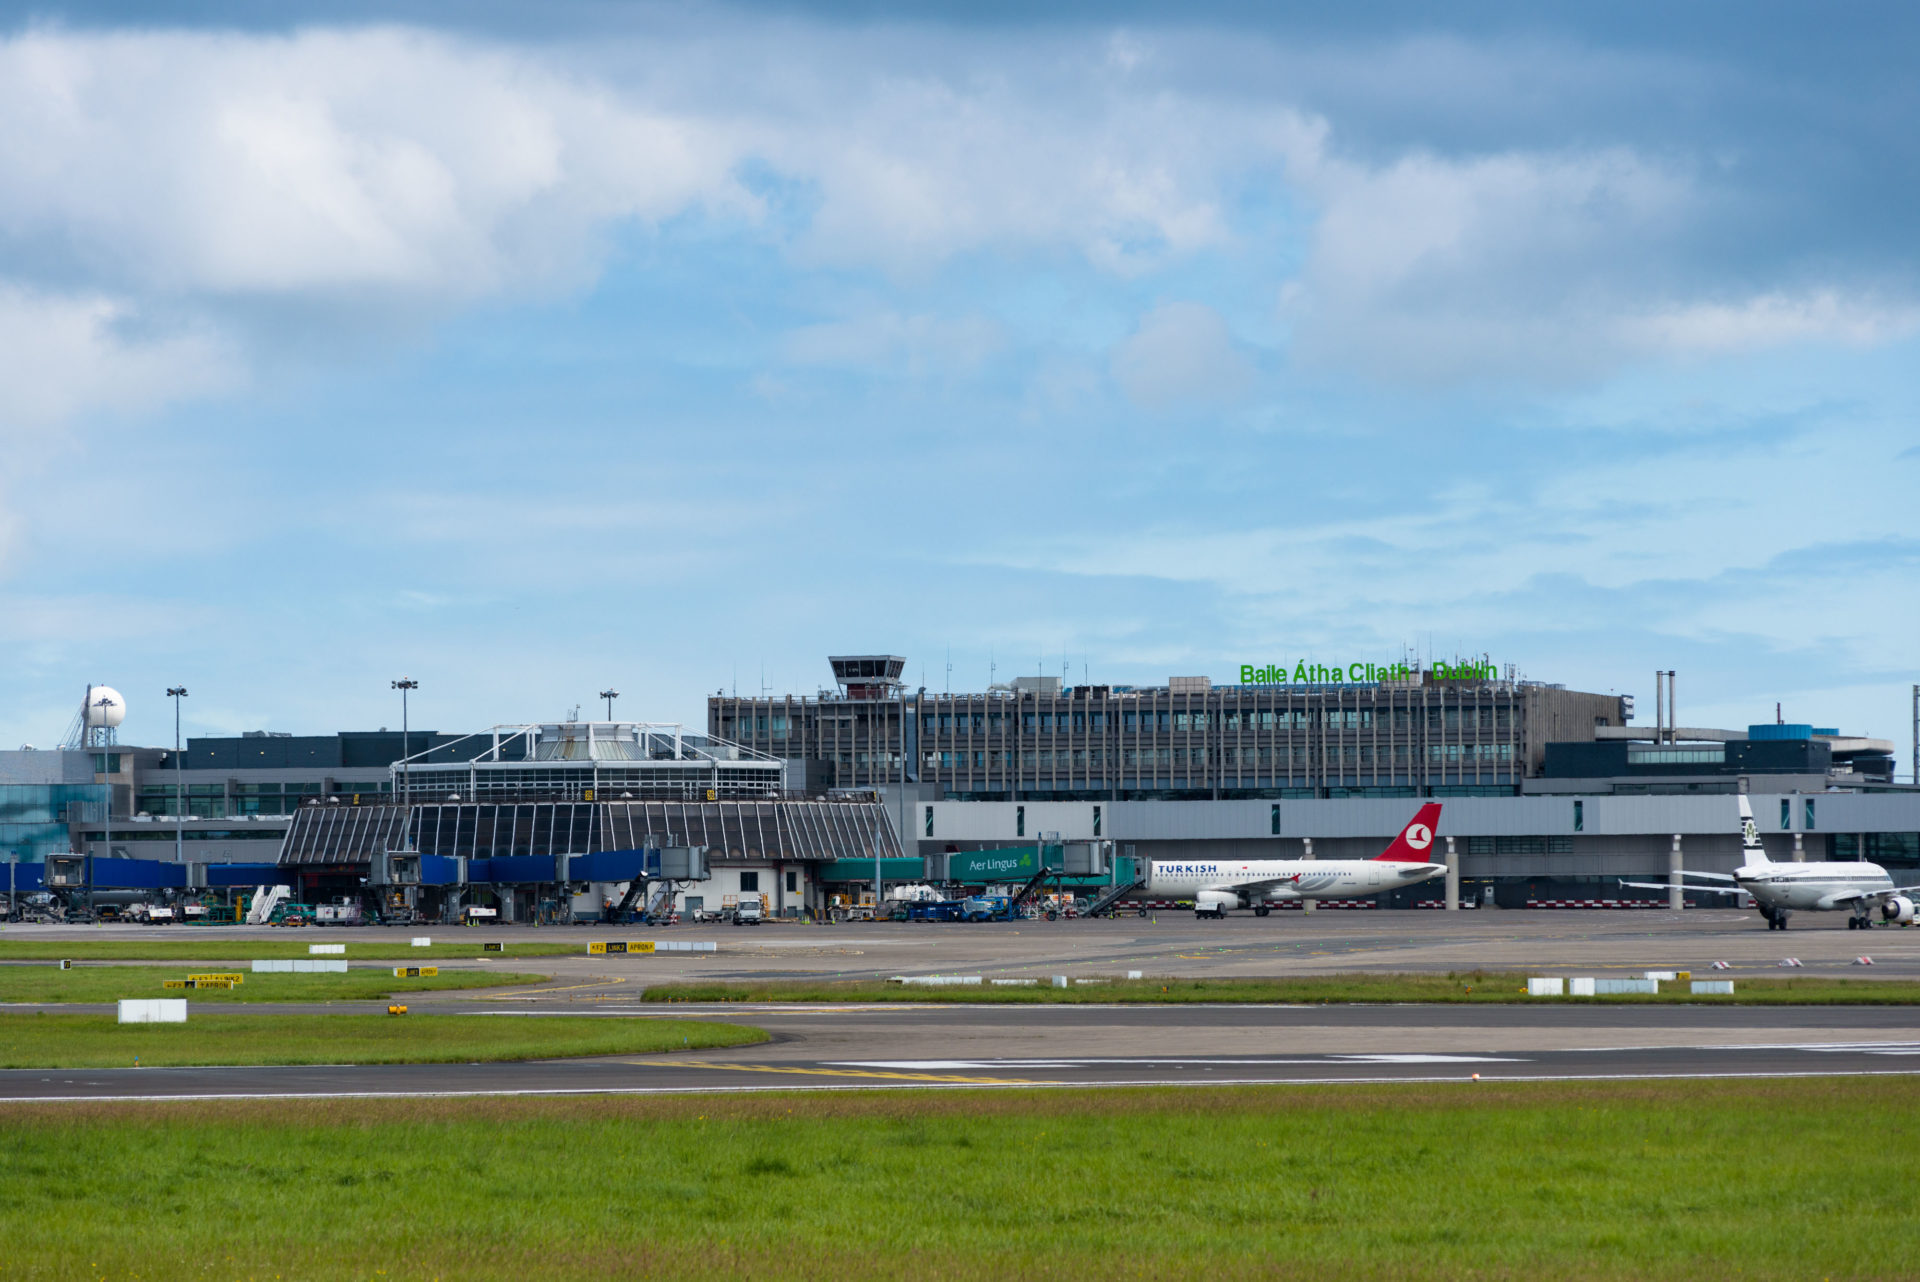 Terminal 1 (T1) at Dublin Airport. Republic of Ireland.